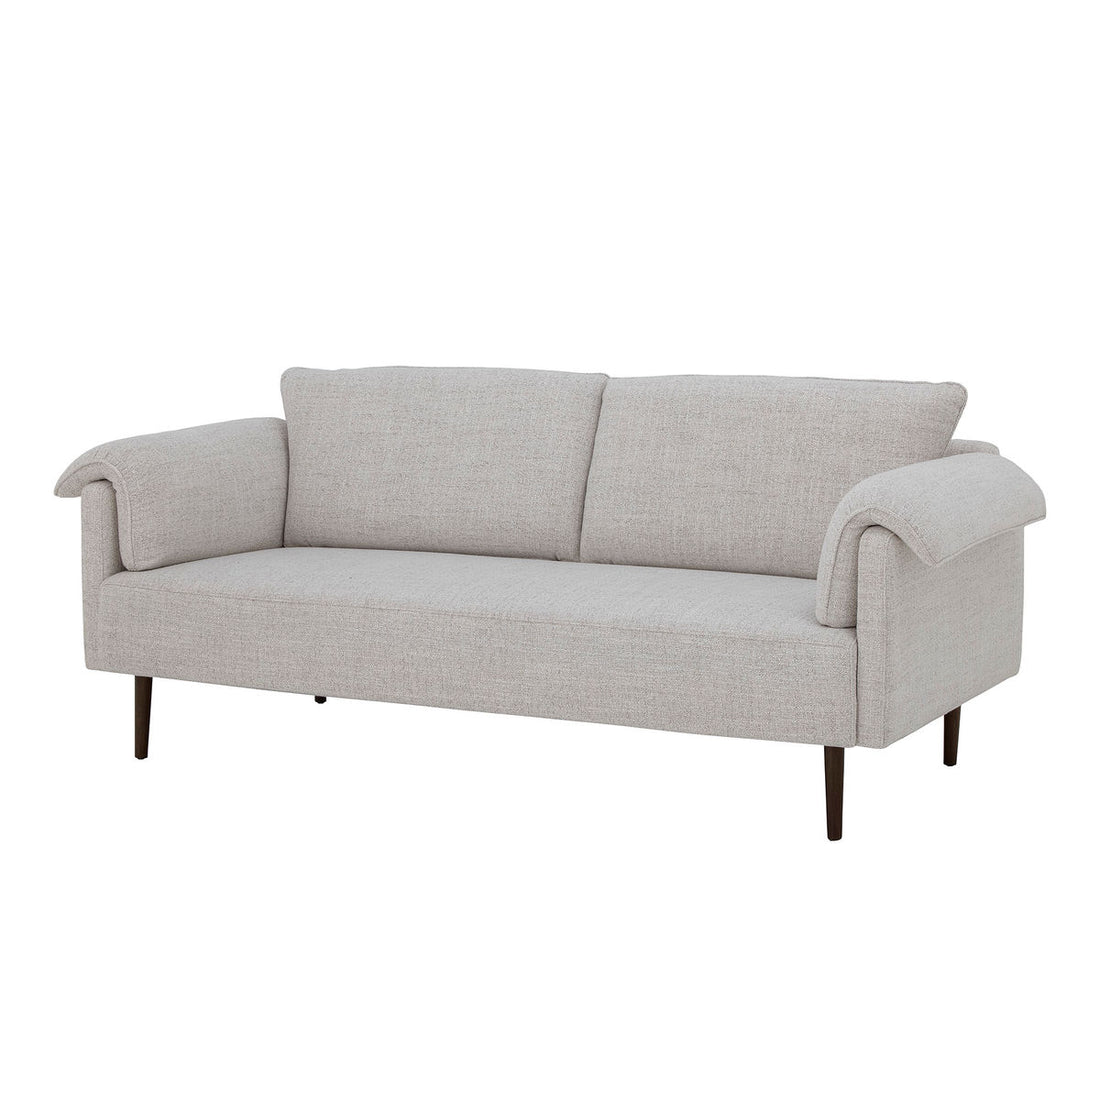 Bloomingville Chesham -sohva, valkoinen, polyesteri